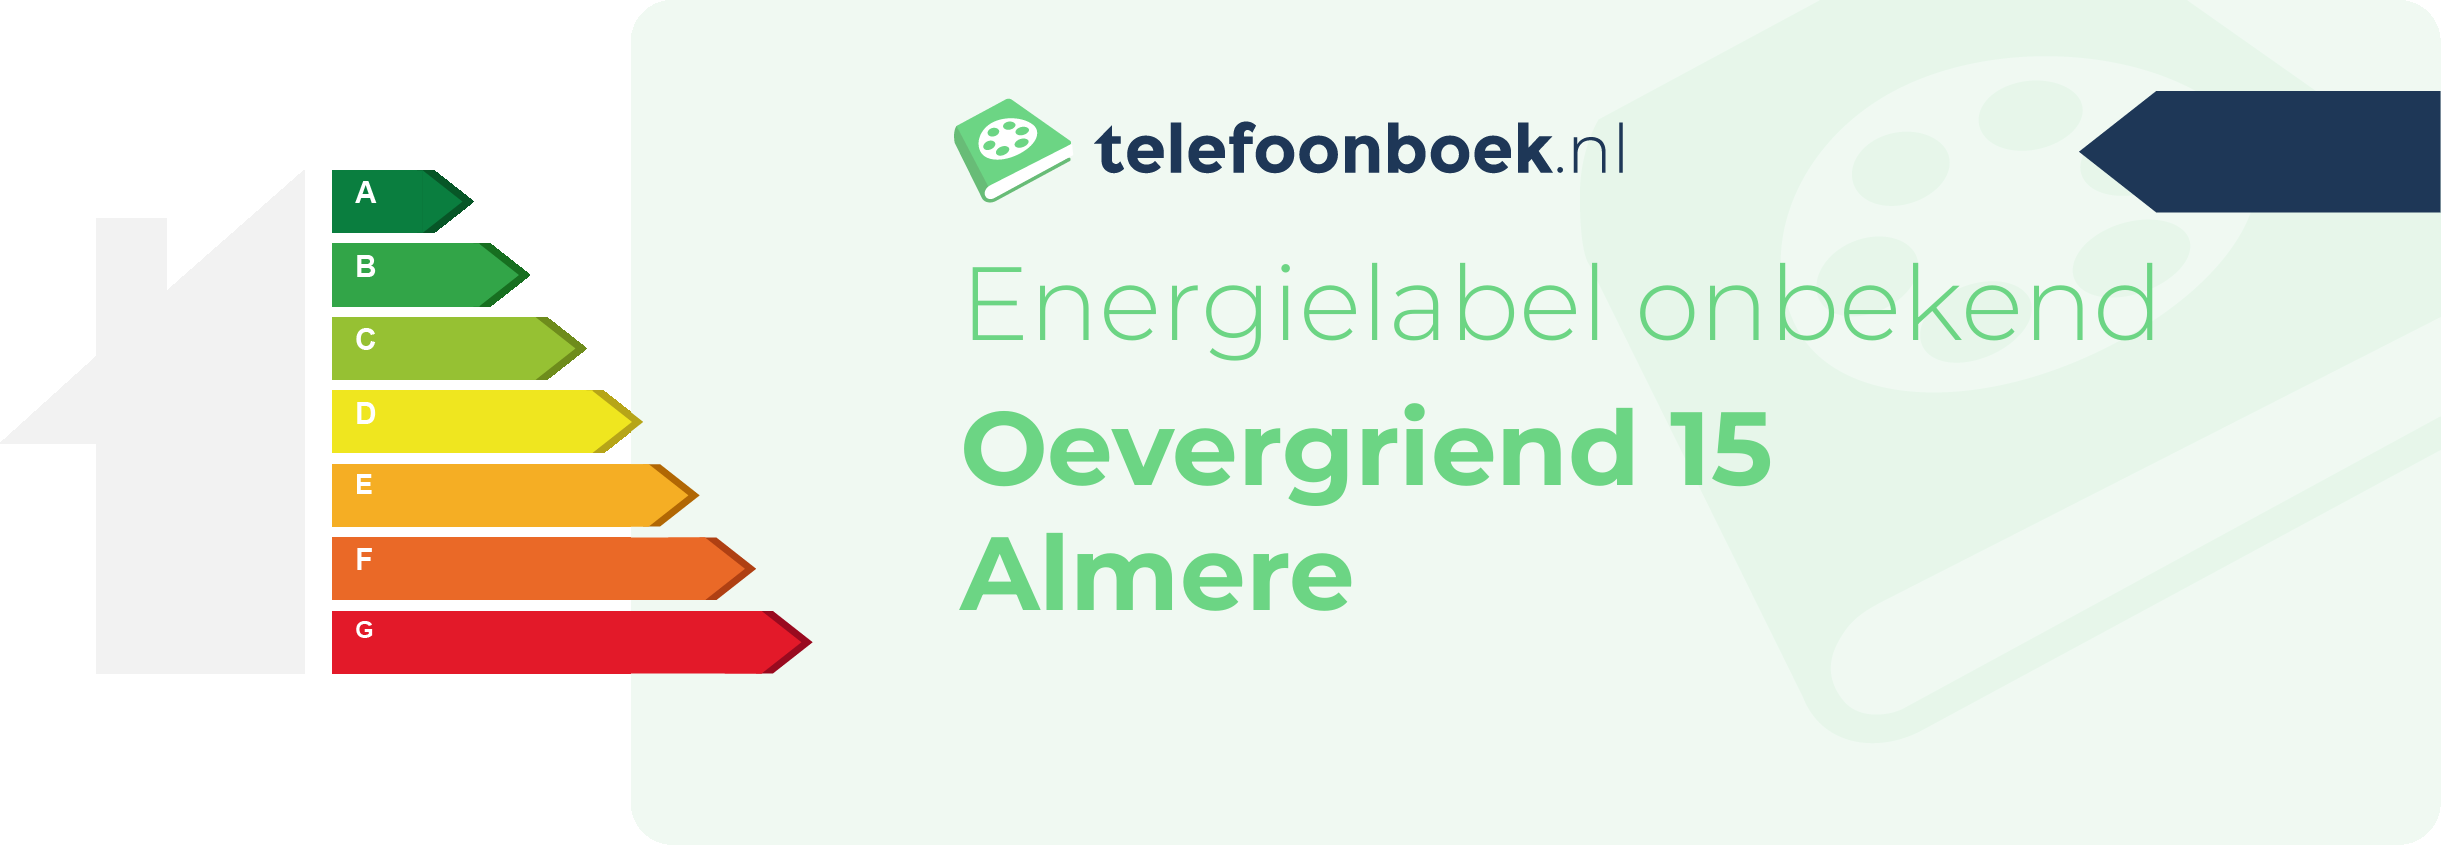 Energielabel Oevergriend 15 Almere